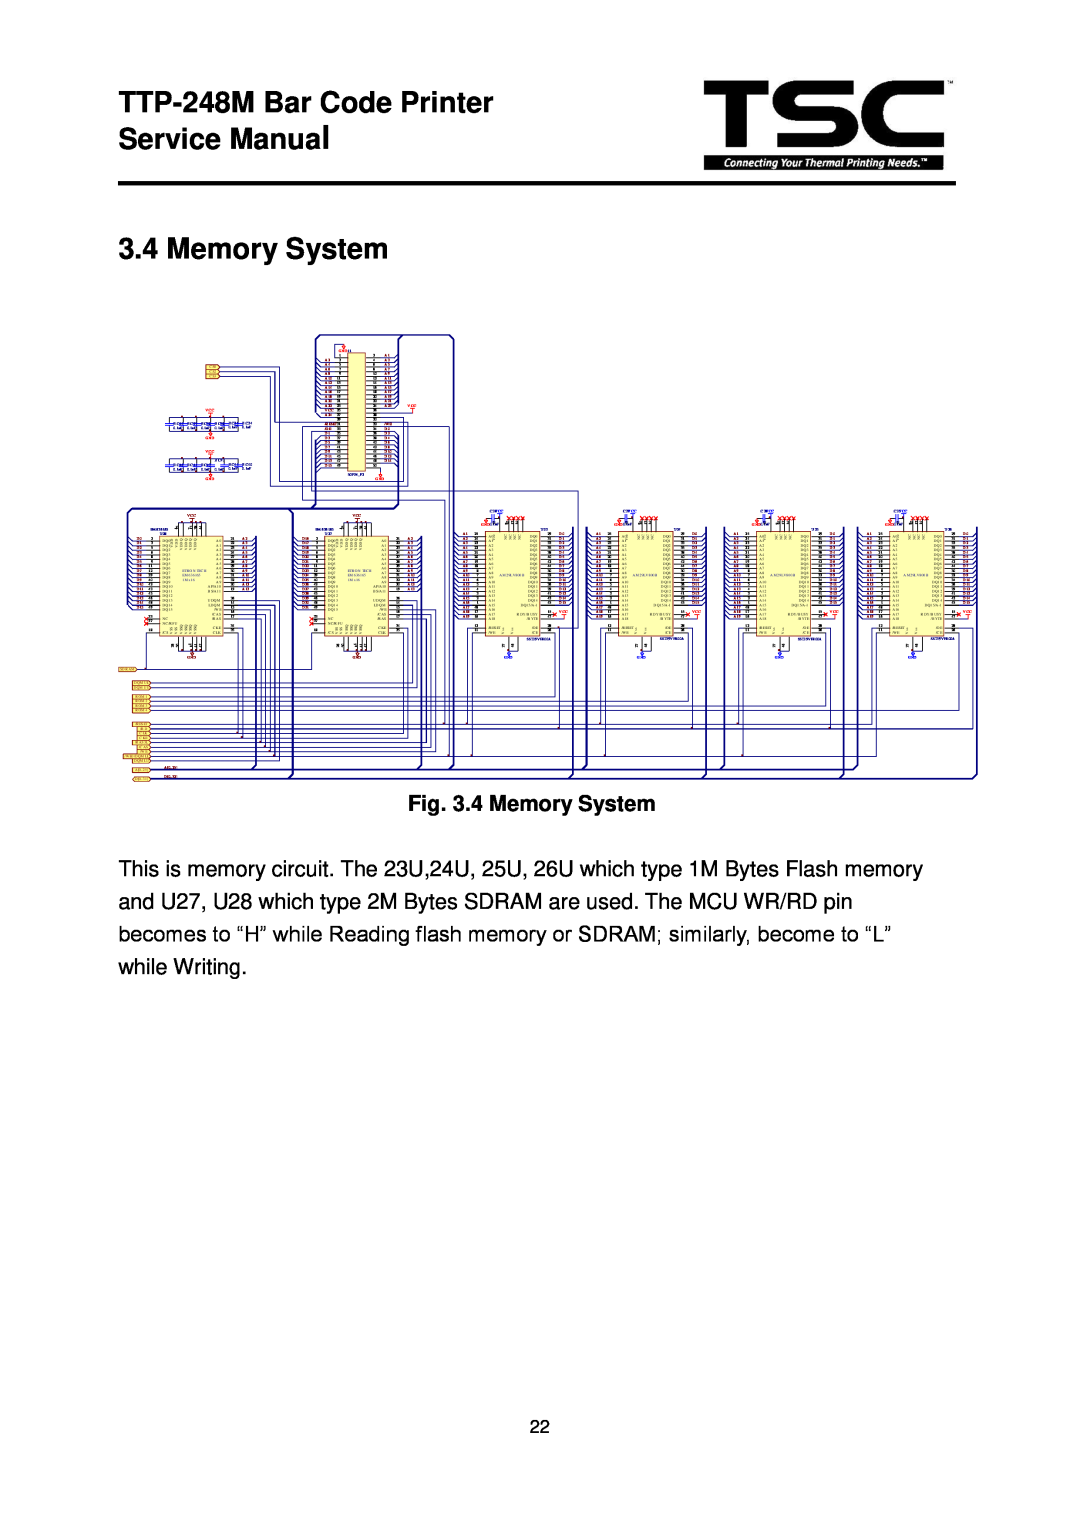 The Speaker Company TTP 248M service manual TTP-248M Bar Code Printer Service Manual 3.4 Memory System, G Nd J, V Cc 